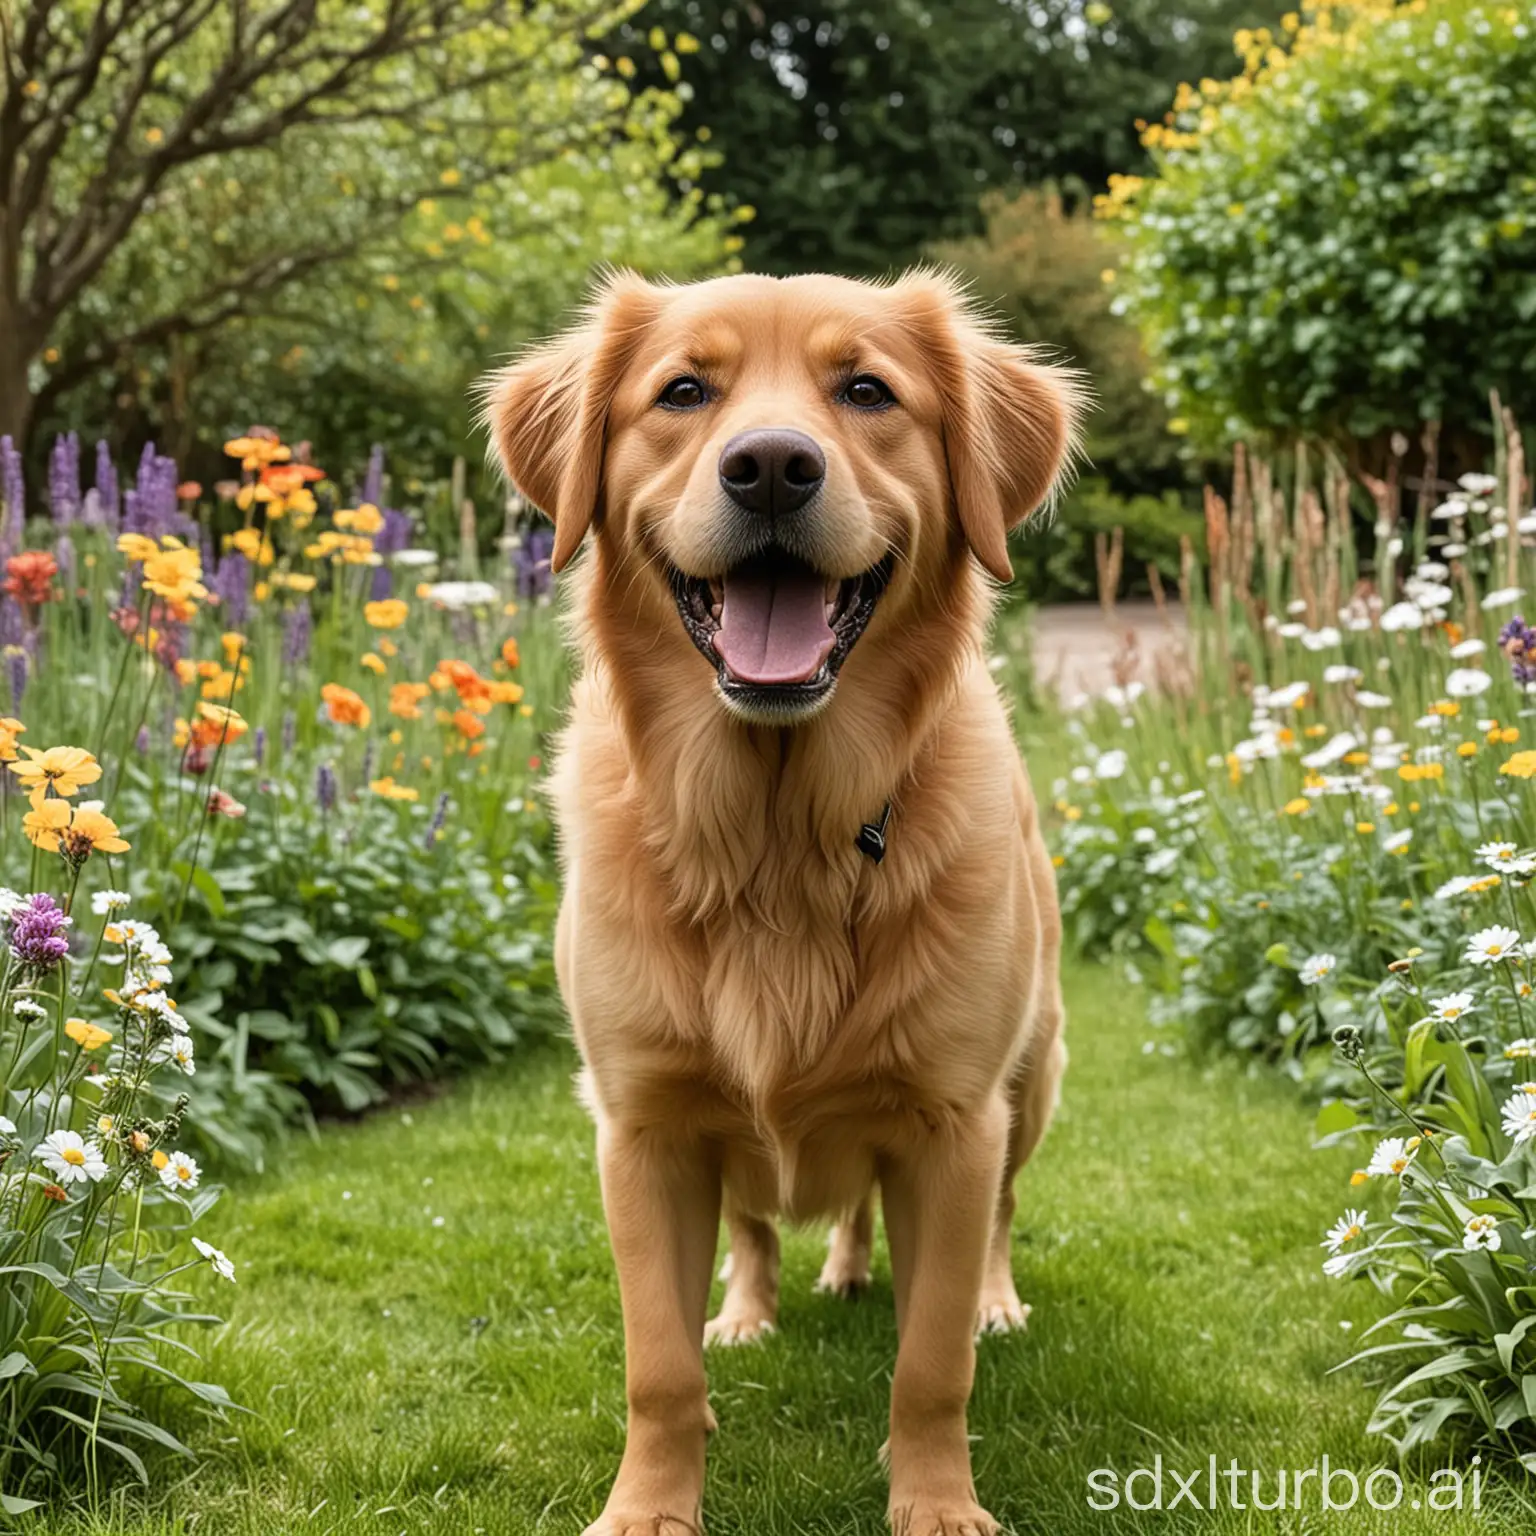 Joyful-Canine-Frolicking-in-a-Lush-Garden-Setting